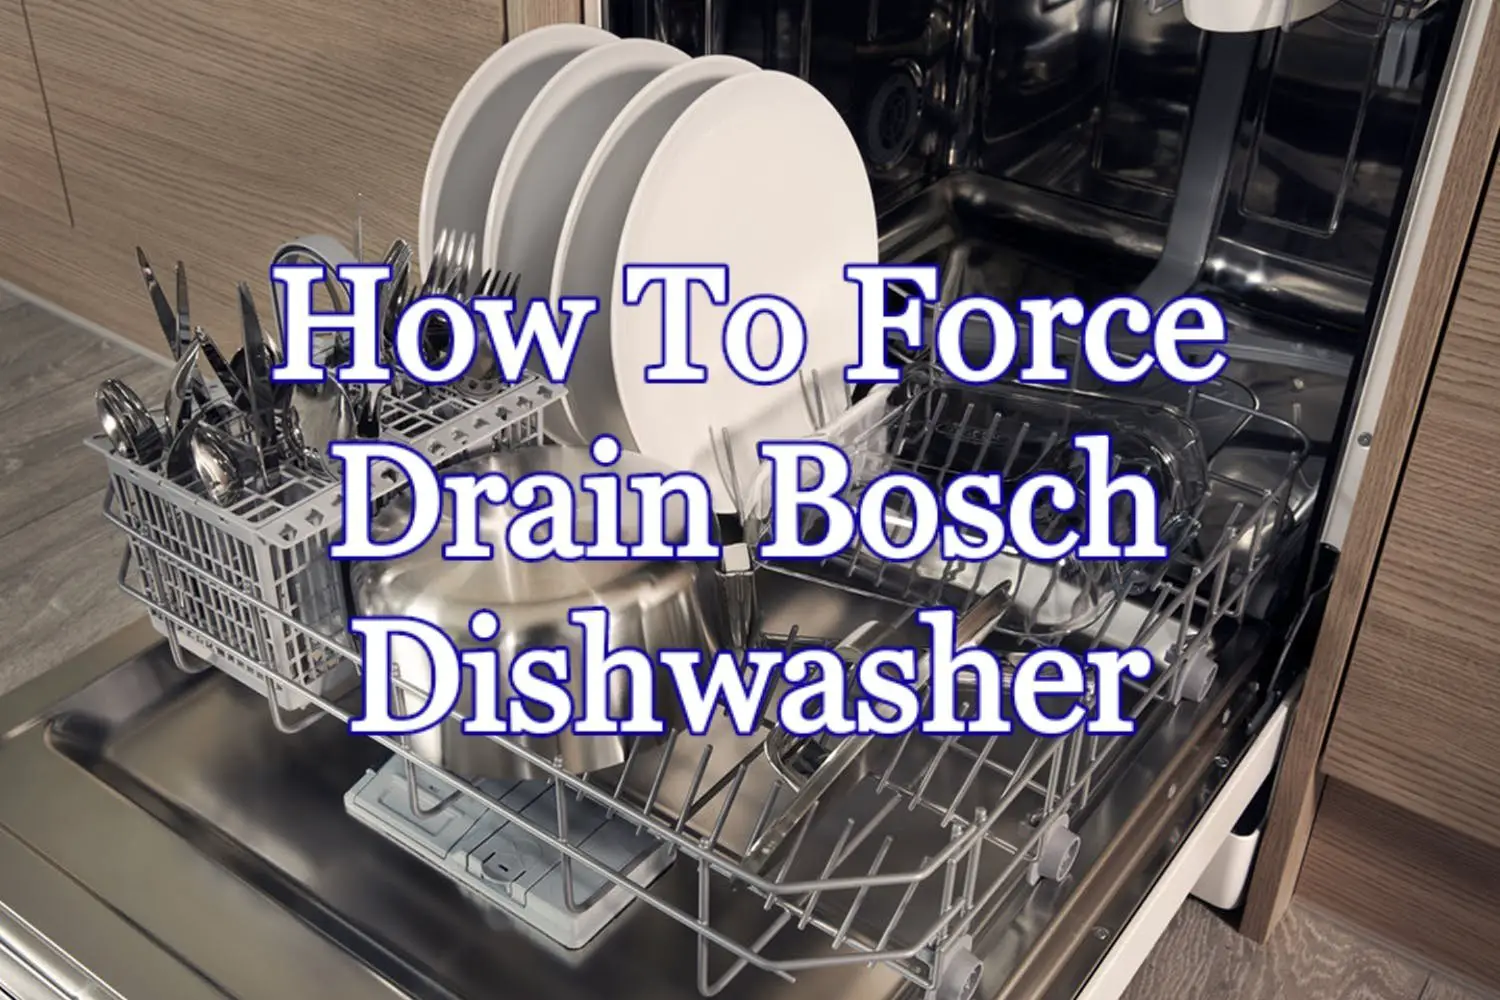 Bosch dishwasher force drain